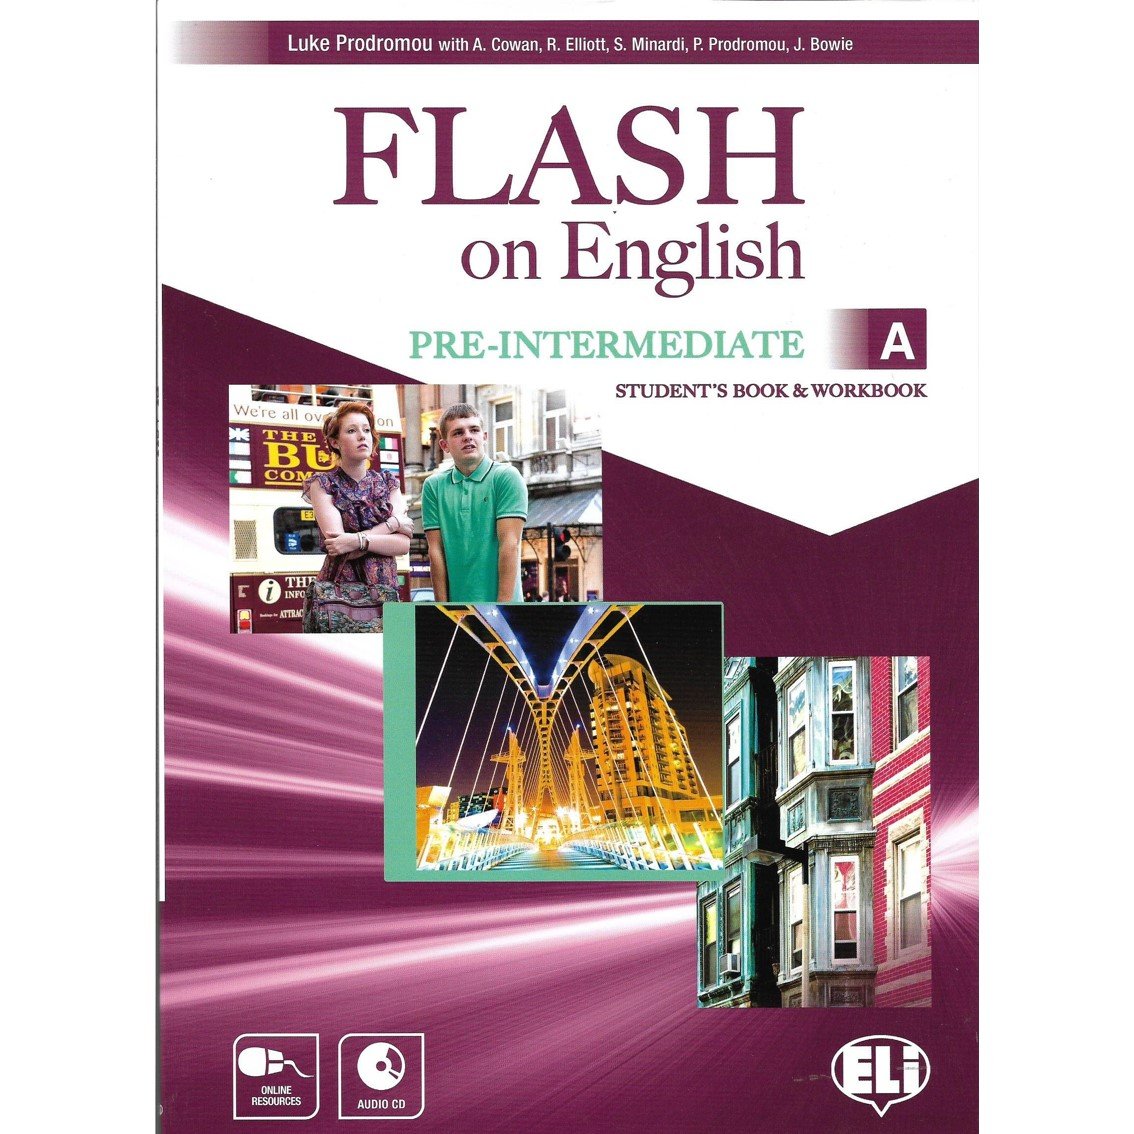 Students book 5. Flash on English. Flash on English for Construction. Flash on English for books. Flash on English student's book.